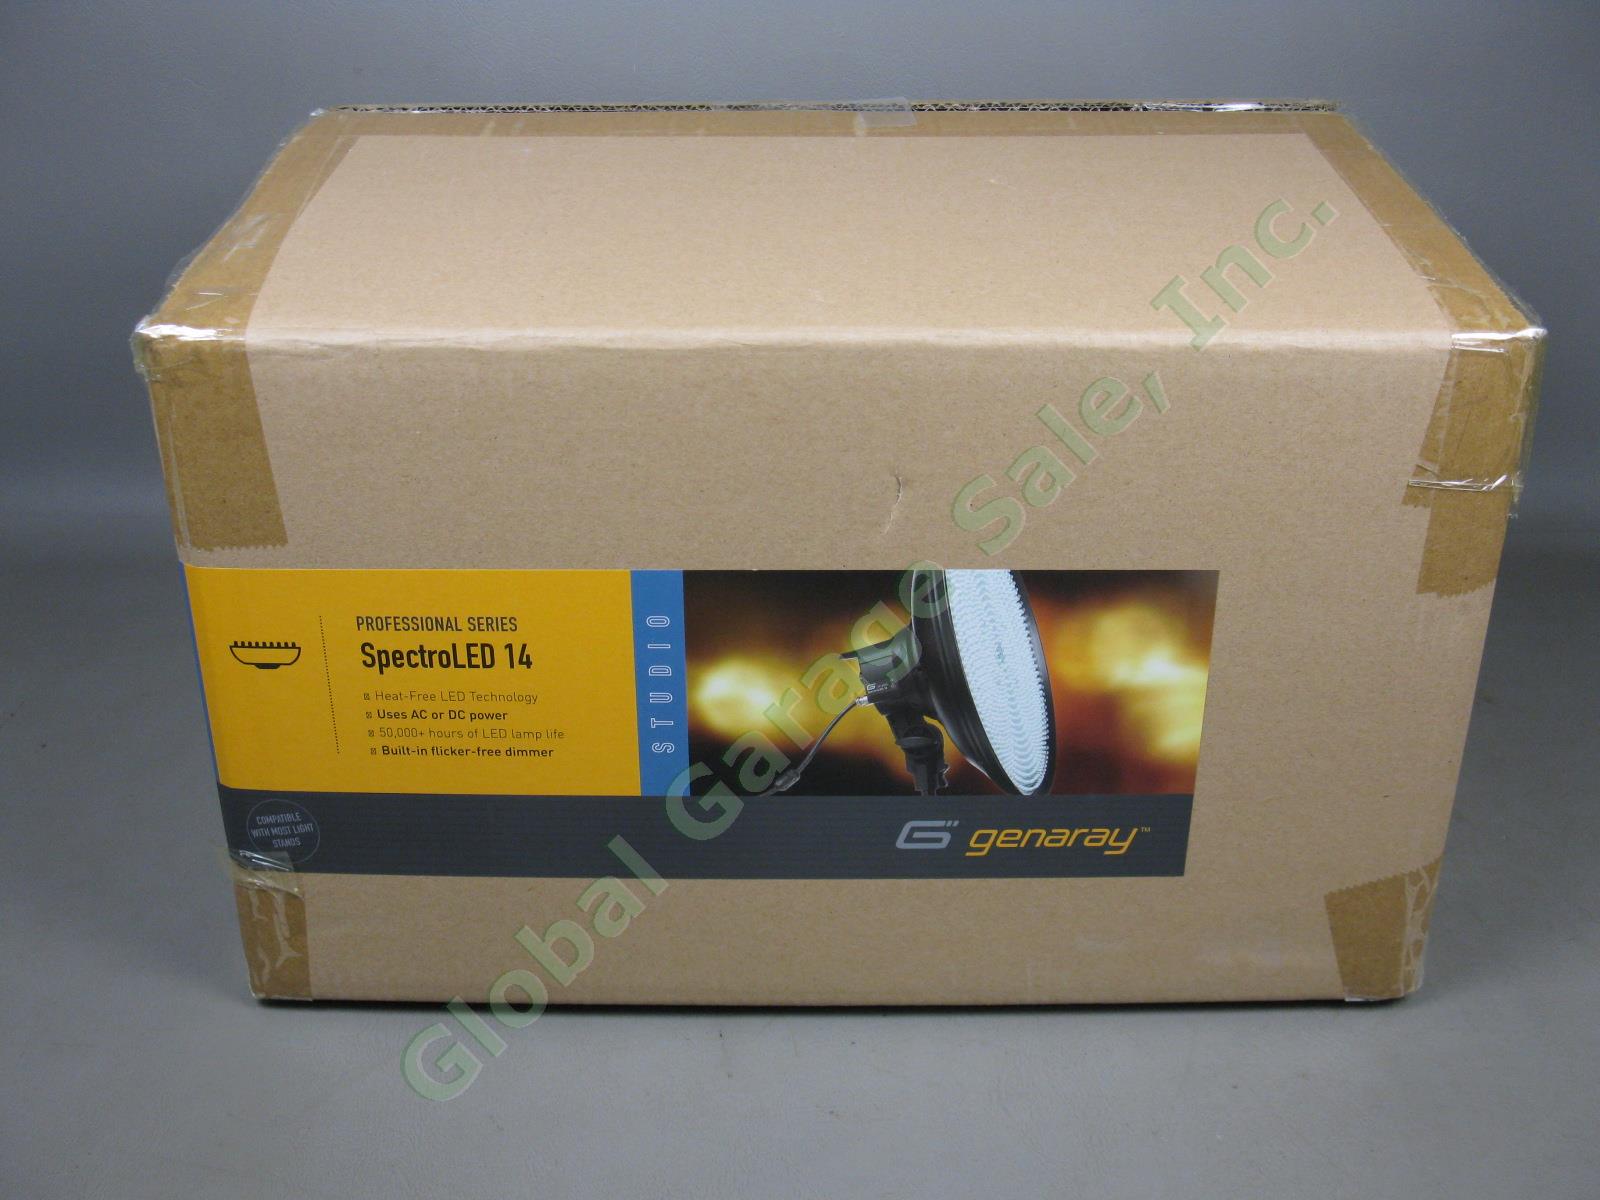 Genaray SpectroLED-14 75W AC/DC Daylight Balanced 5600K LED Light SP-AD75 $274